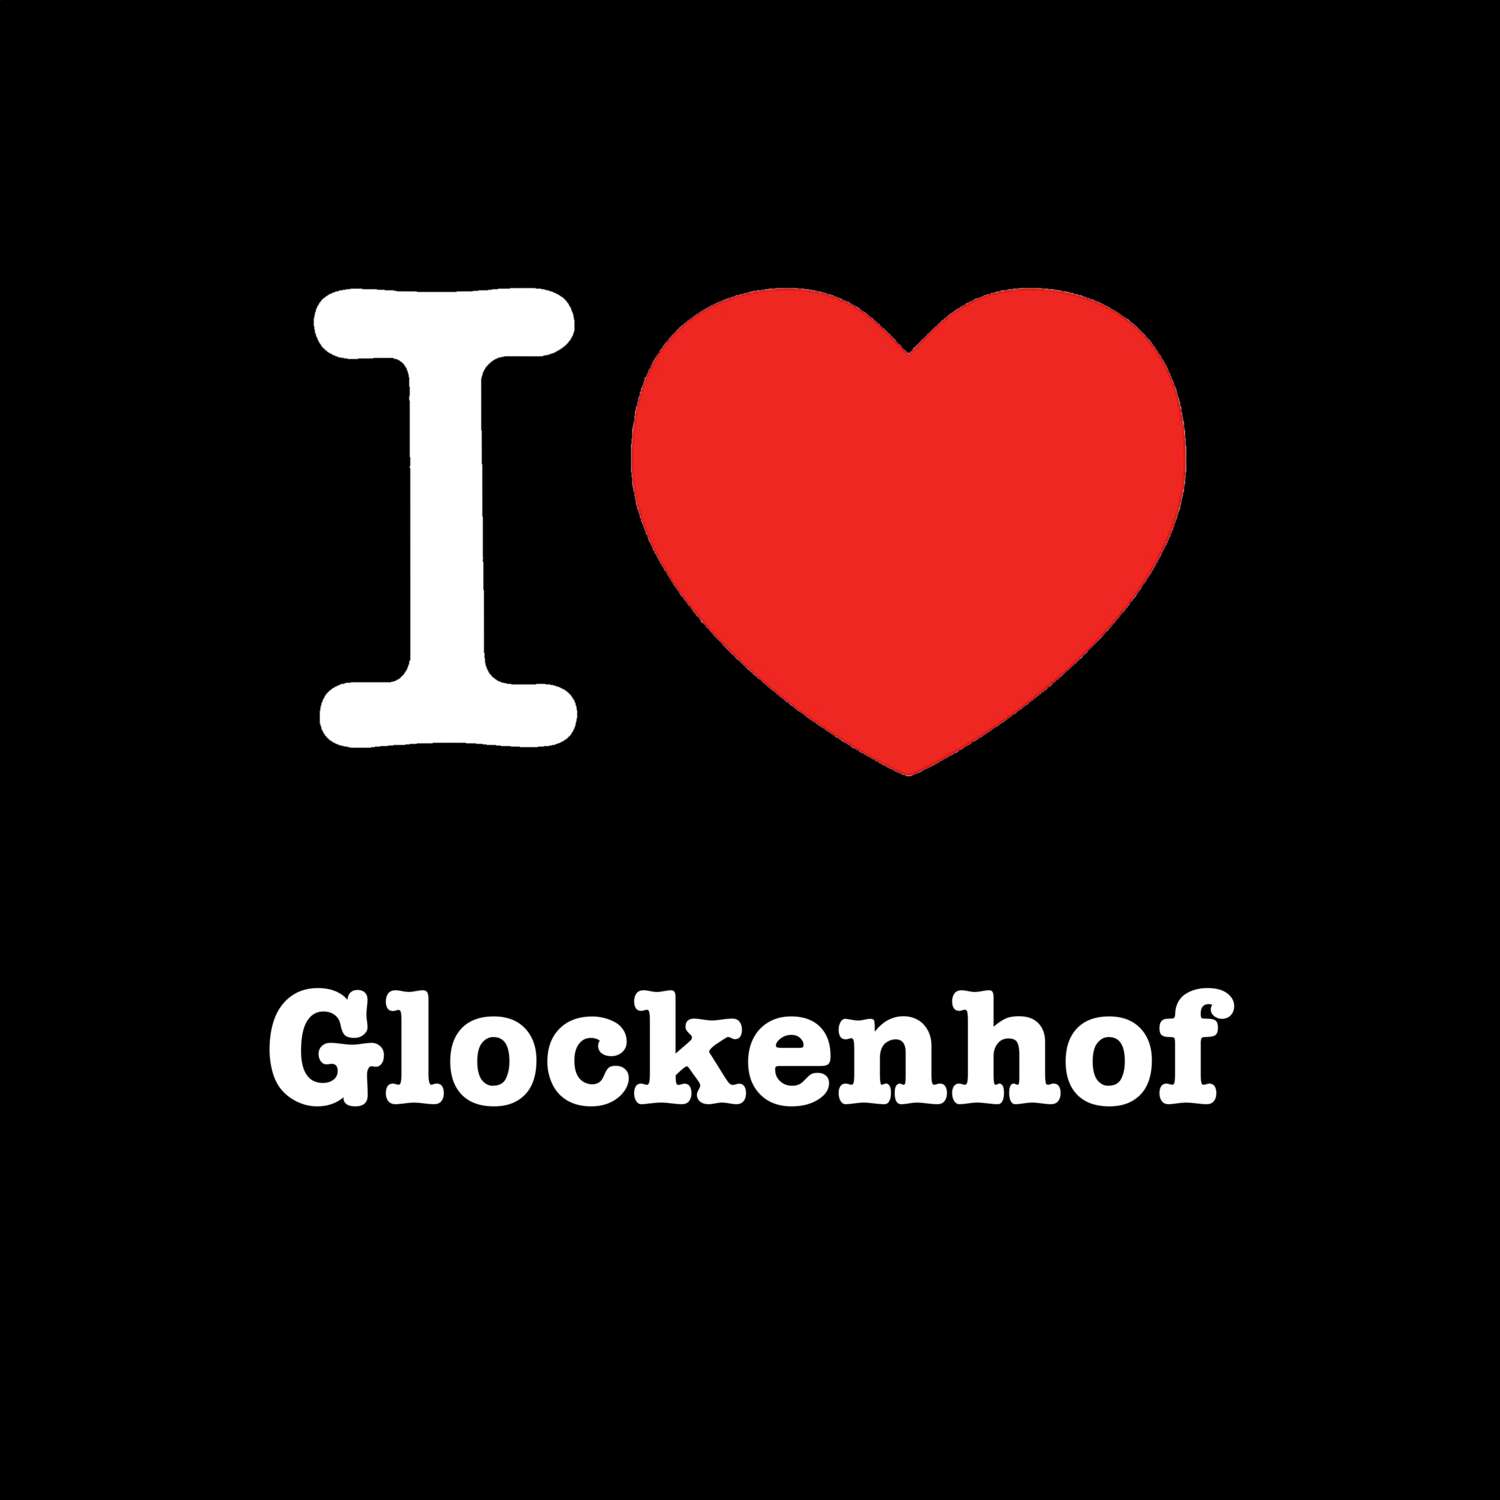 Glockenhof T-Shirt »I love«